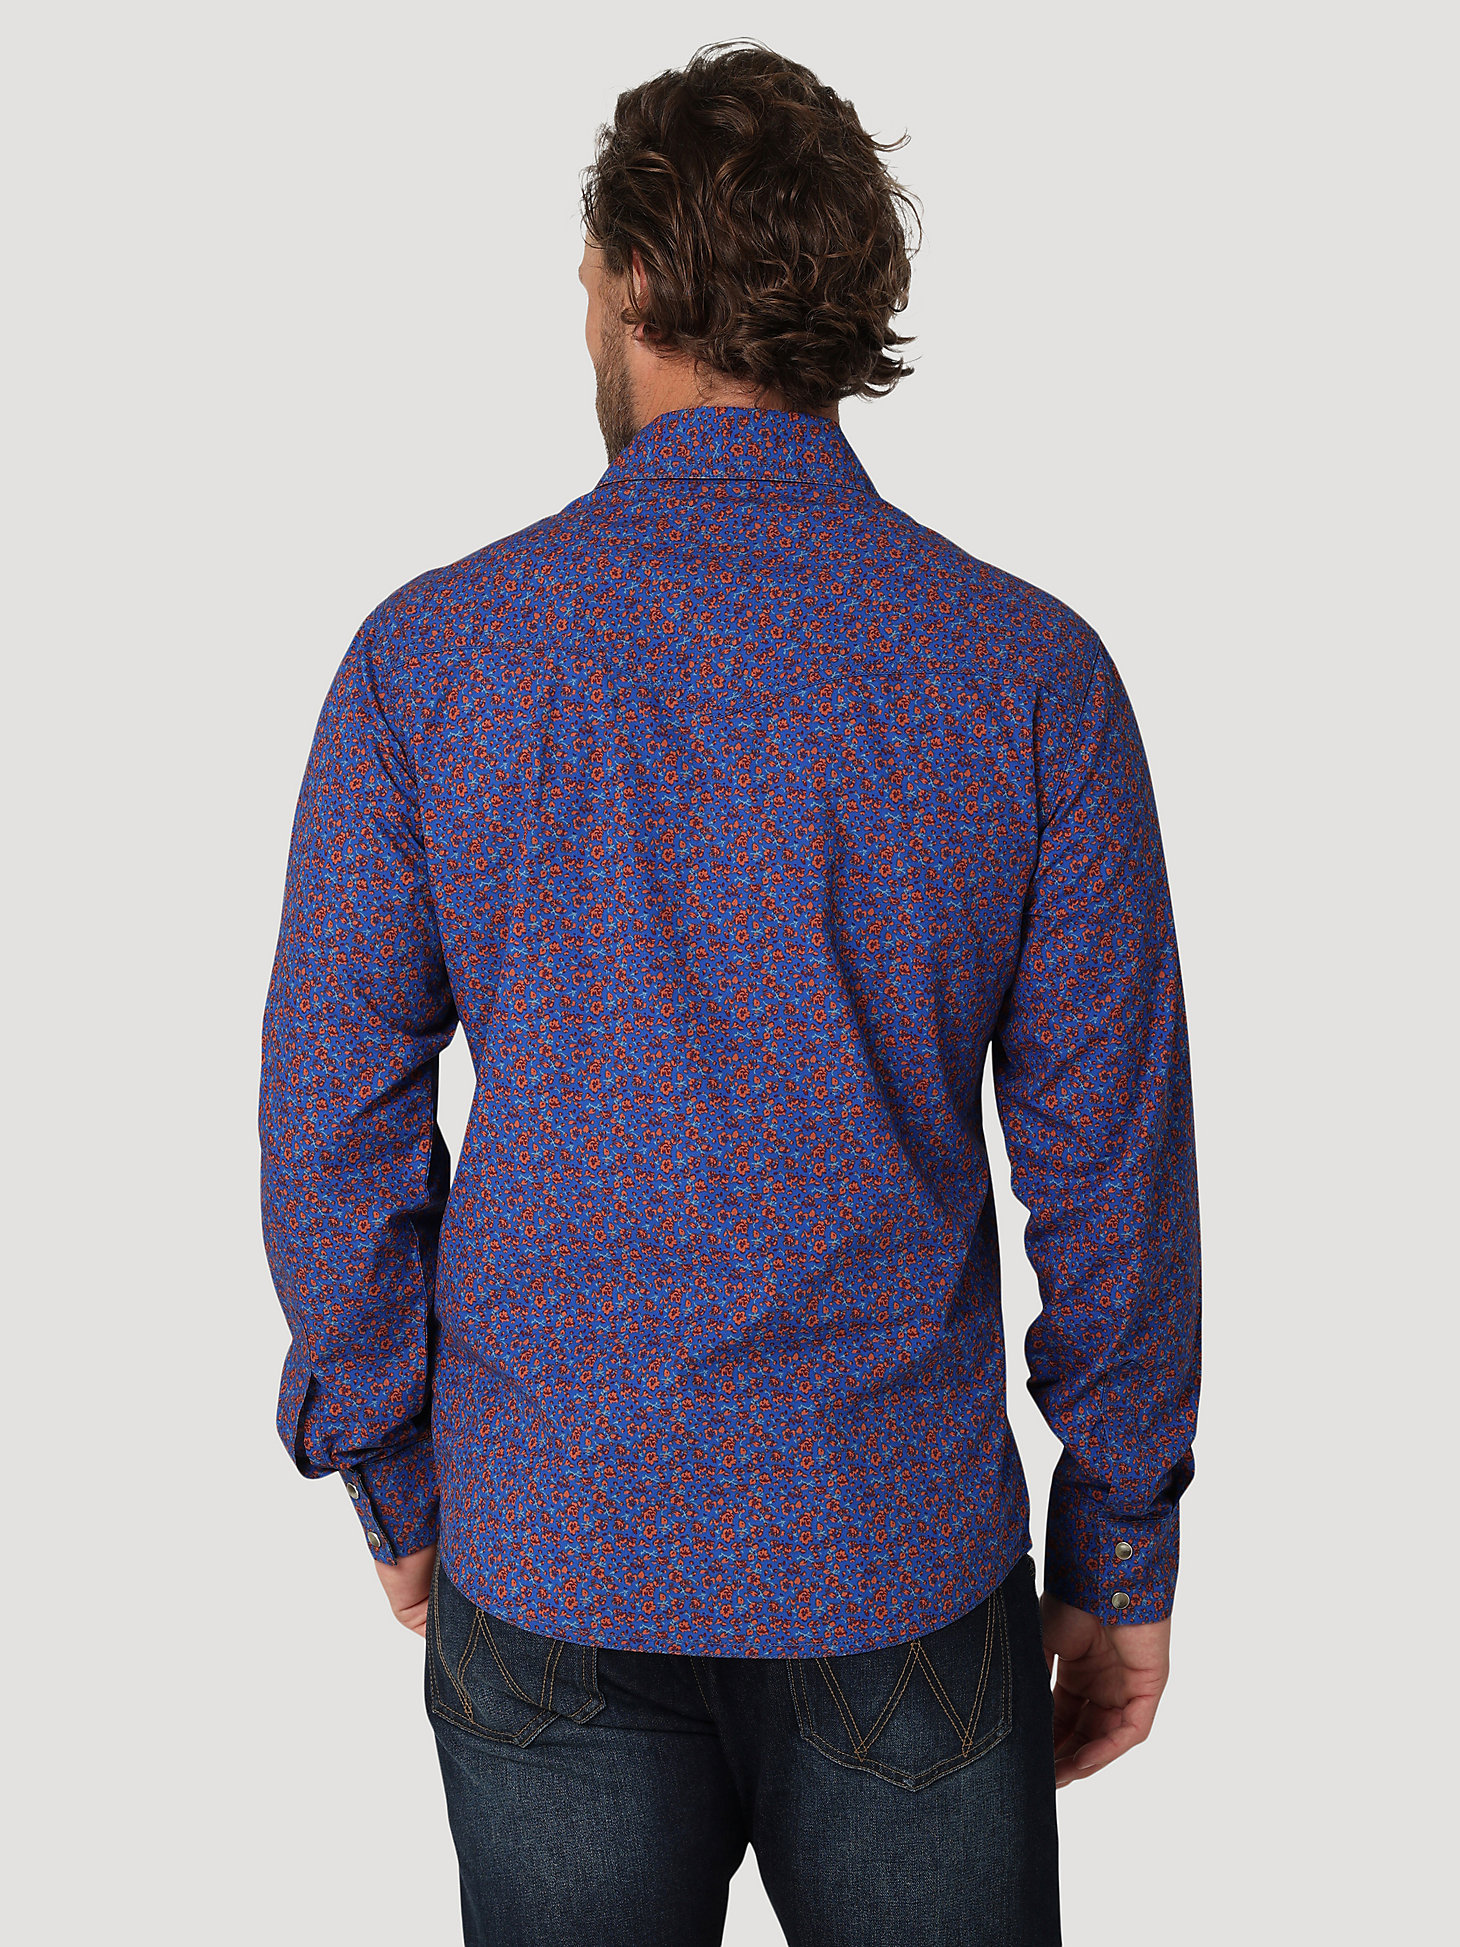 Men's Wrangler Retro® Premium Long Sleeve Western Snap Printed Shirt in Purple Blue alternative view 1